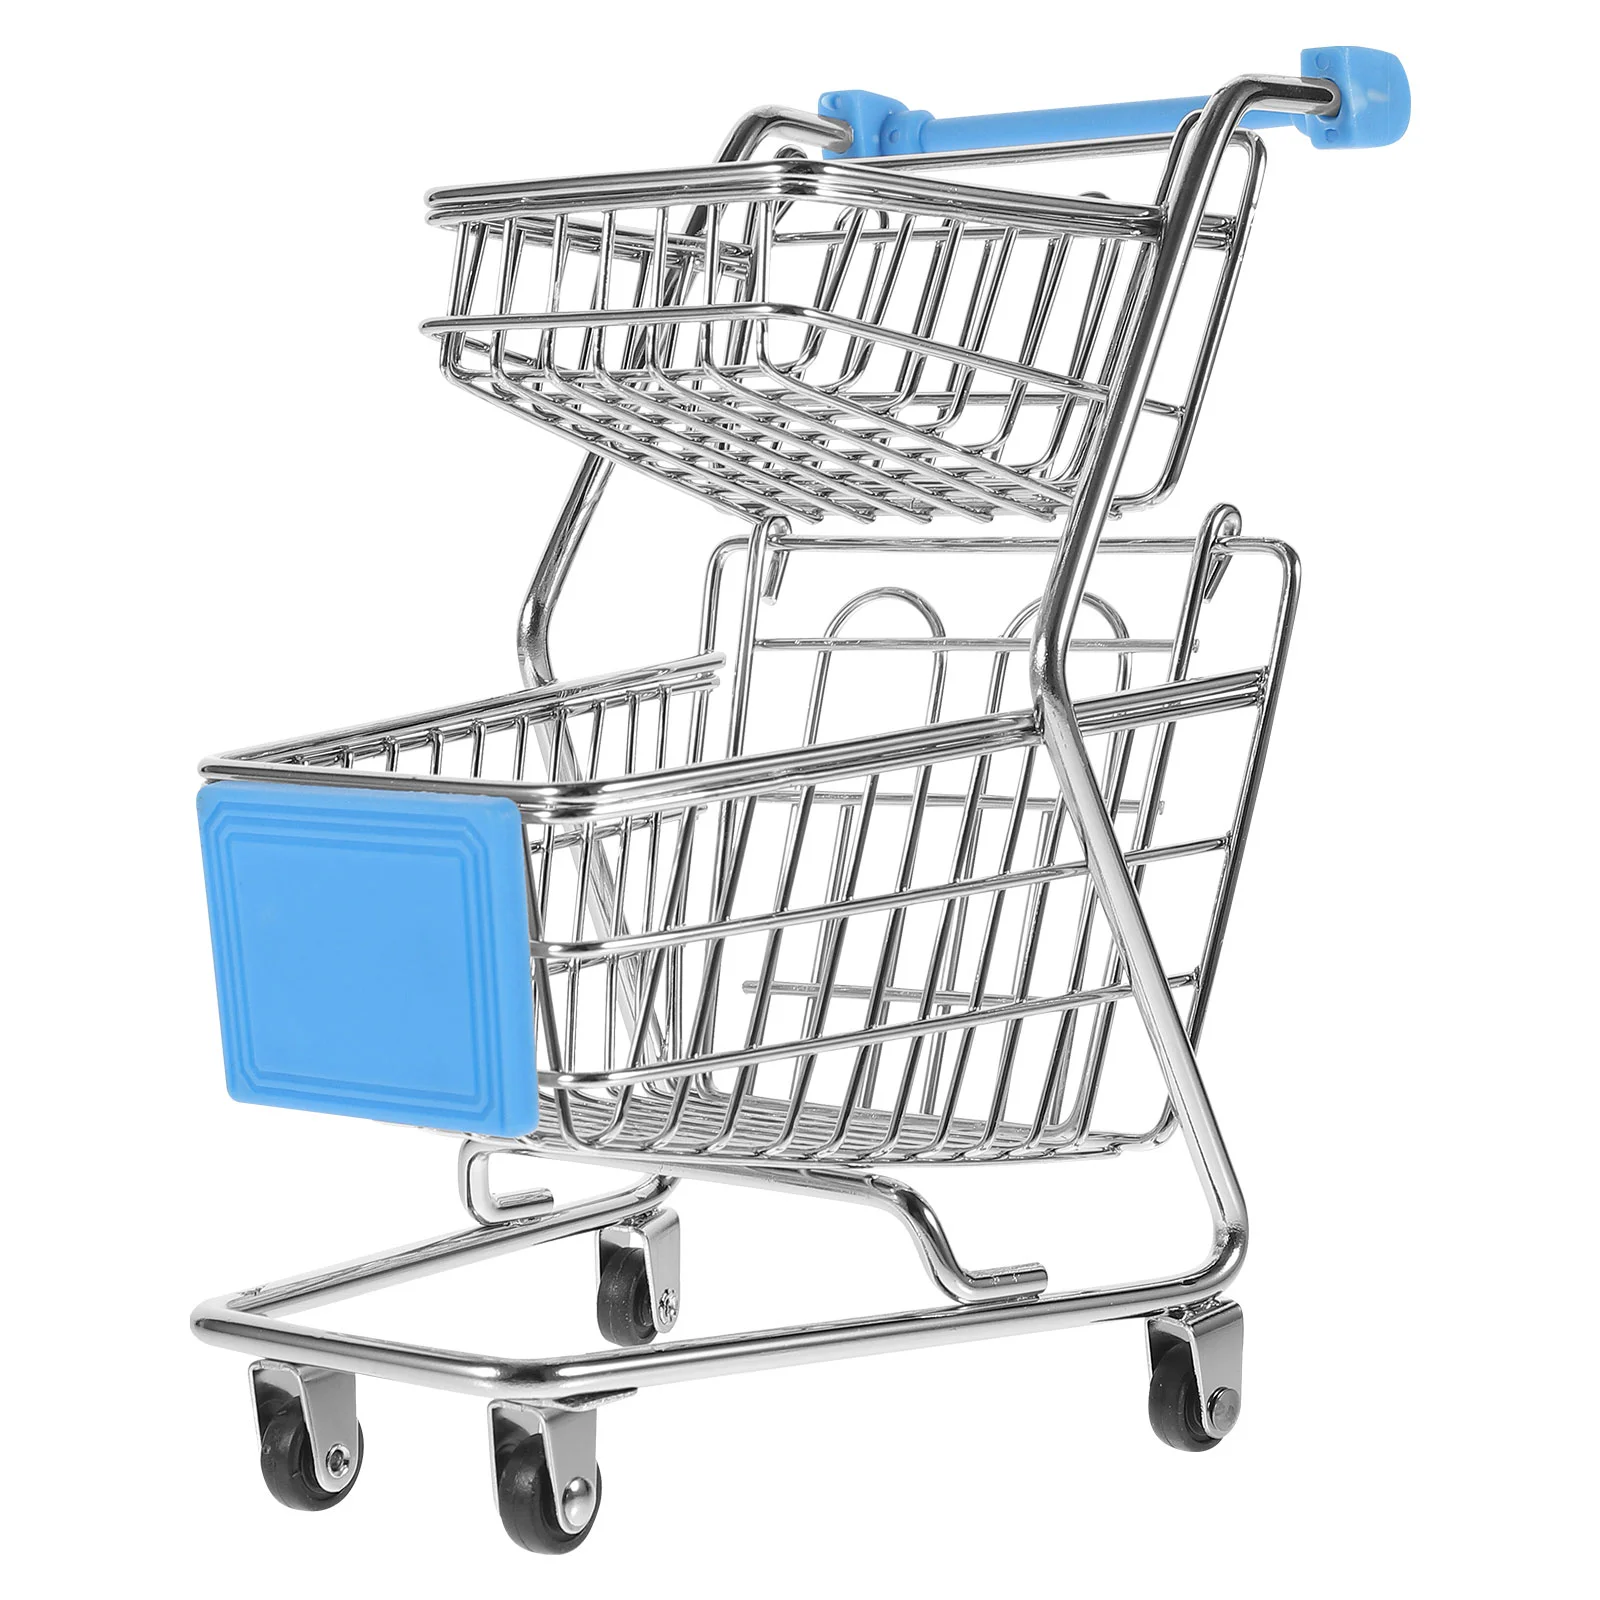 Mini Shopping Cart Trolley Make Up Holder Rack Storage Basket Toy Small Shopping Cart